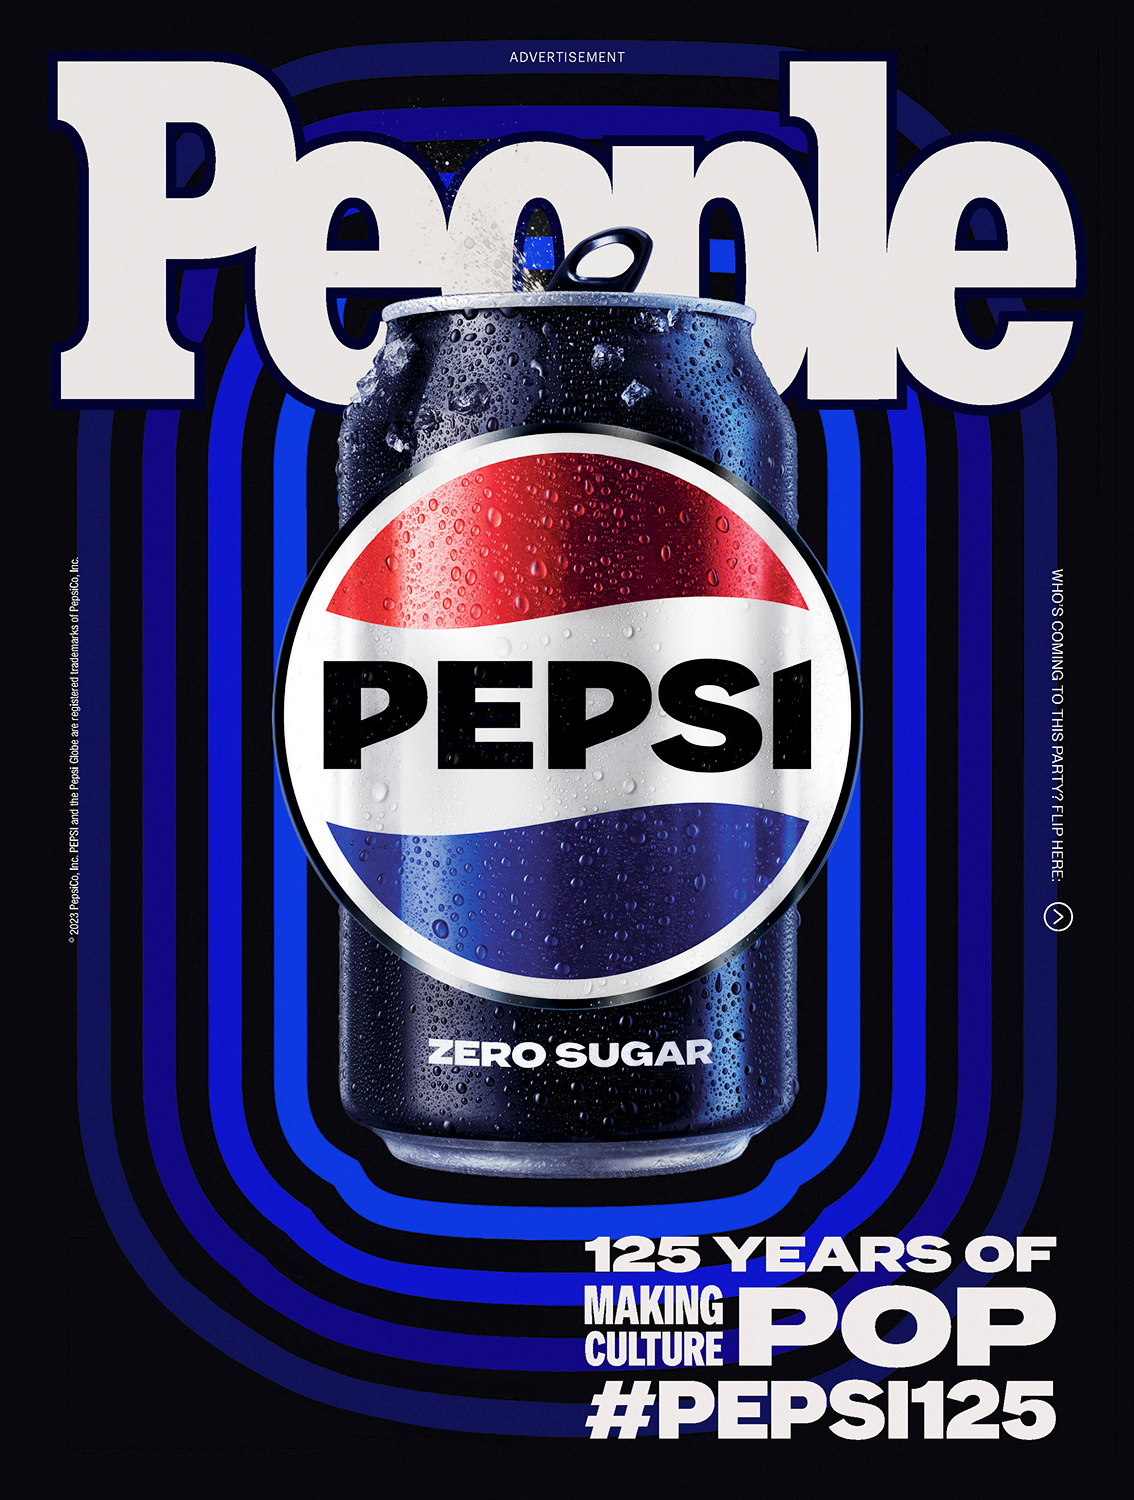 People_Pepsi_Final_Sml